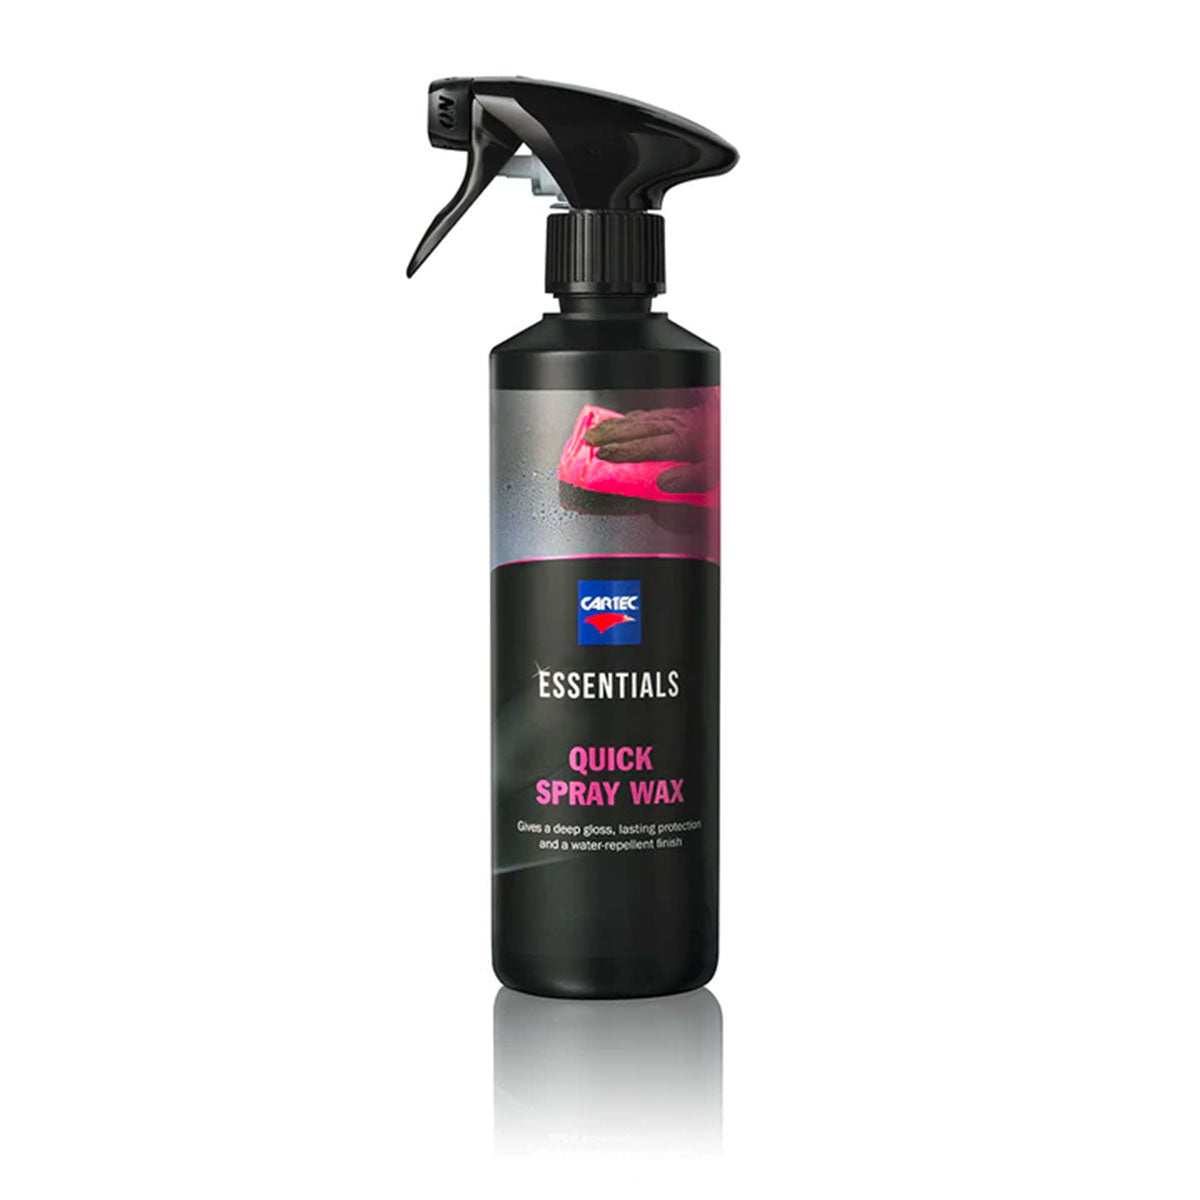 Cartec Essential Quick Spray Wax - Cera Rapida Protettiva Idrorepellente